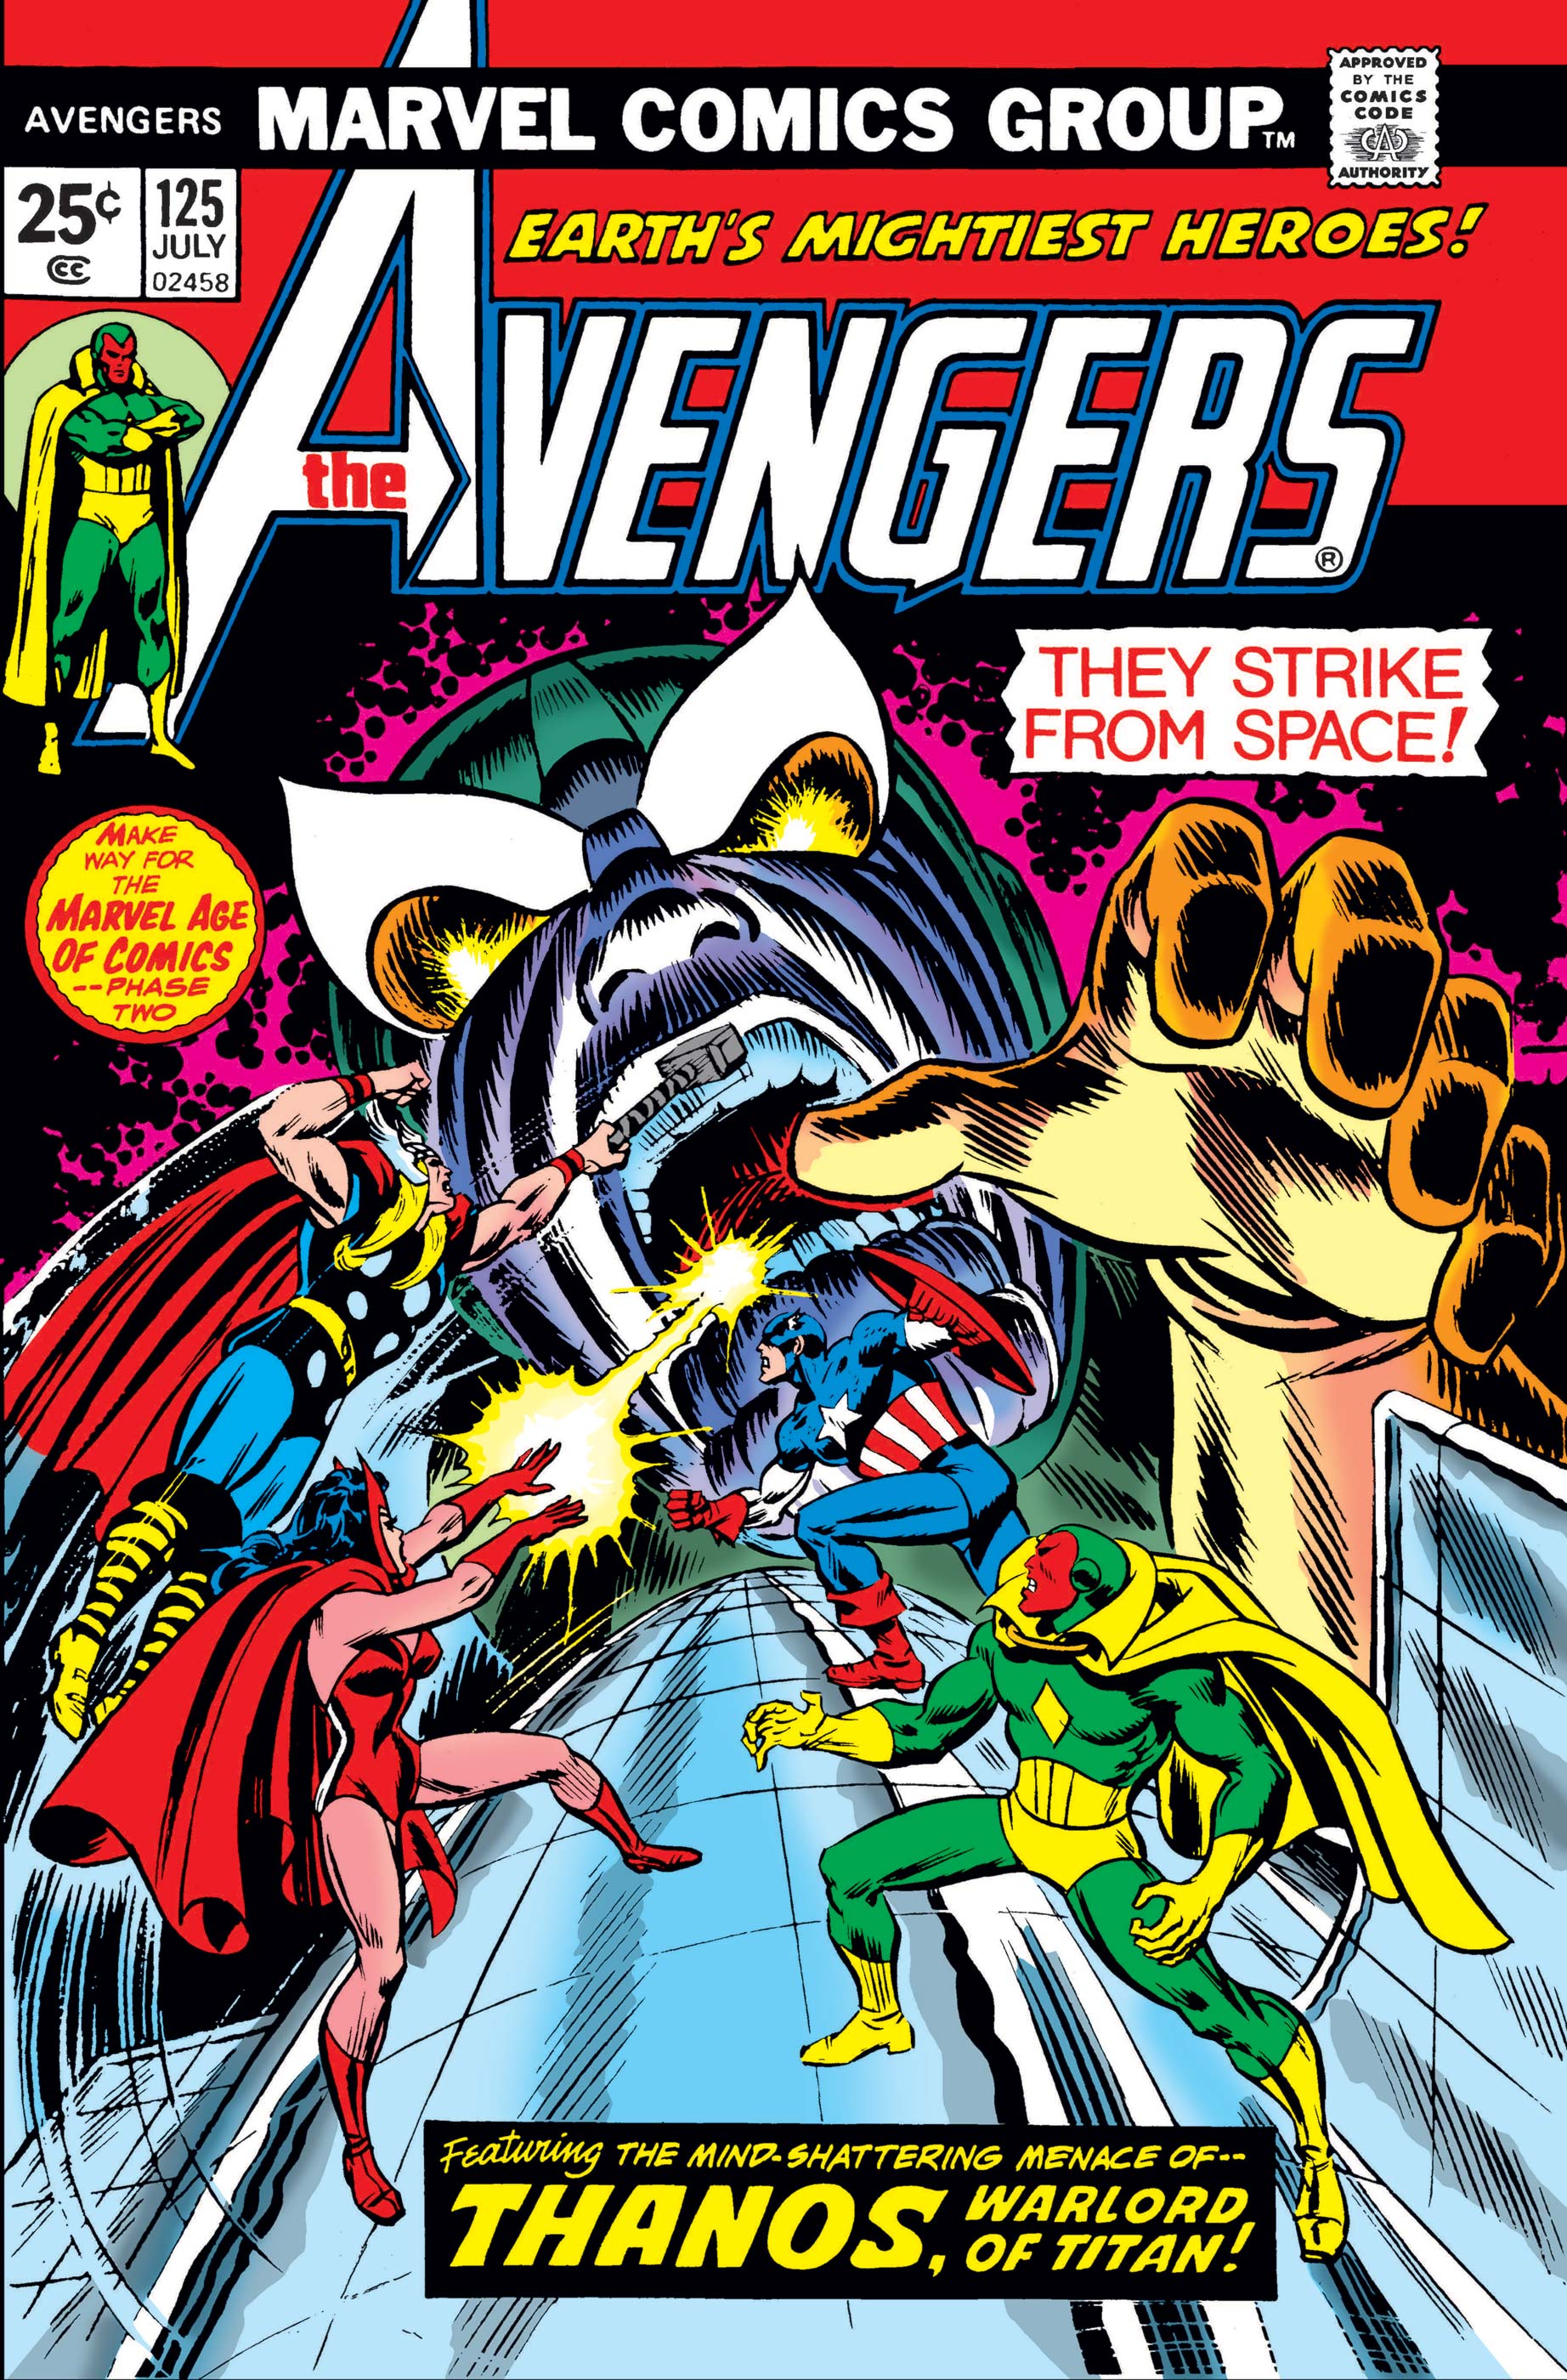 Avengers Vol 1 125  Marvel Database  FANDOM powered by Wikia